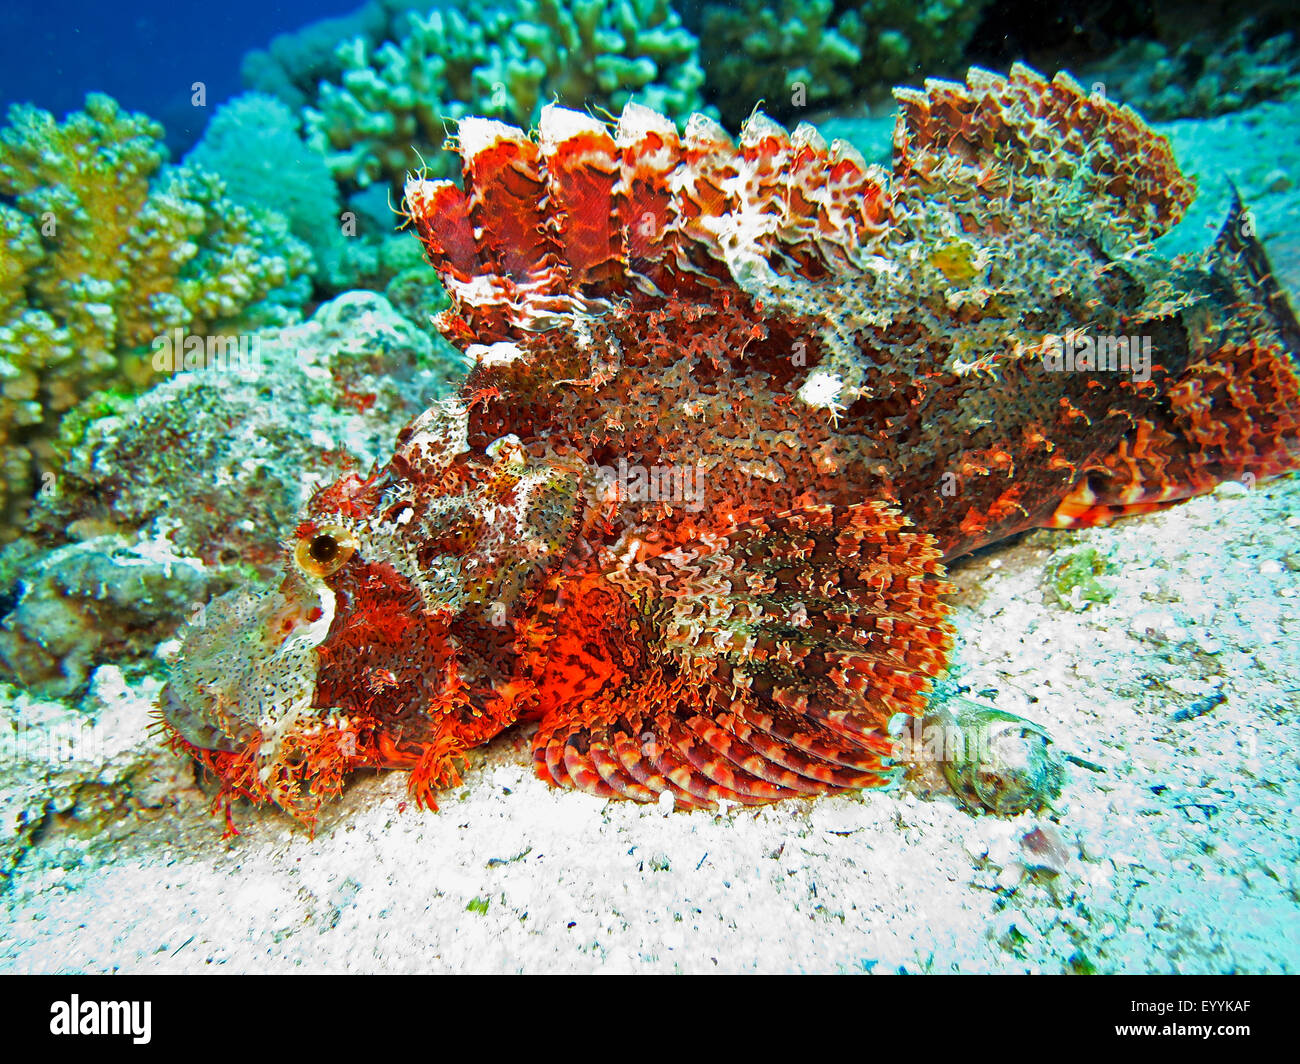 tassled scorpionfish, smallscale scorpionfish, flathead scorpionfish (Scorpaenopsis oxycephalus), on sea ground, Egypt, Red Sea, Safaga Stock Photo